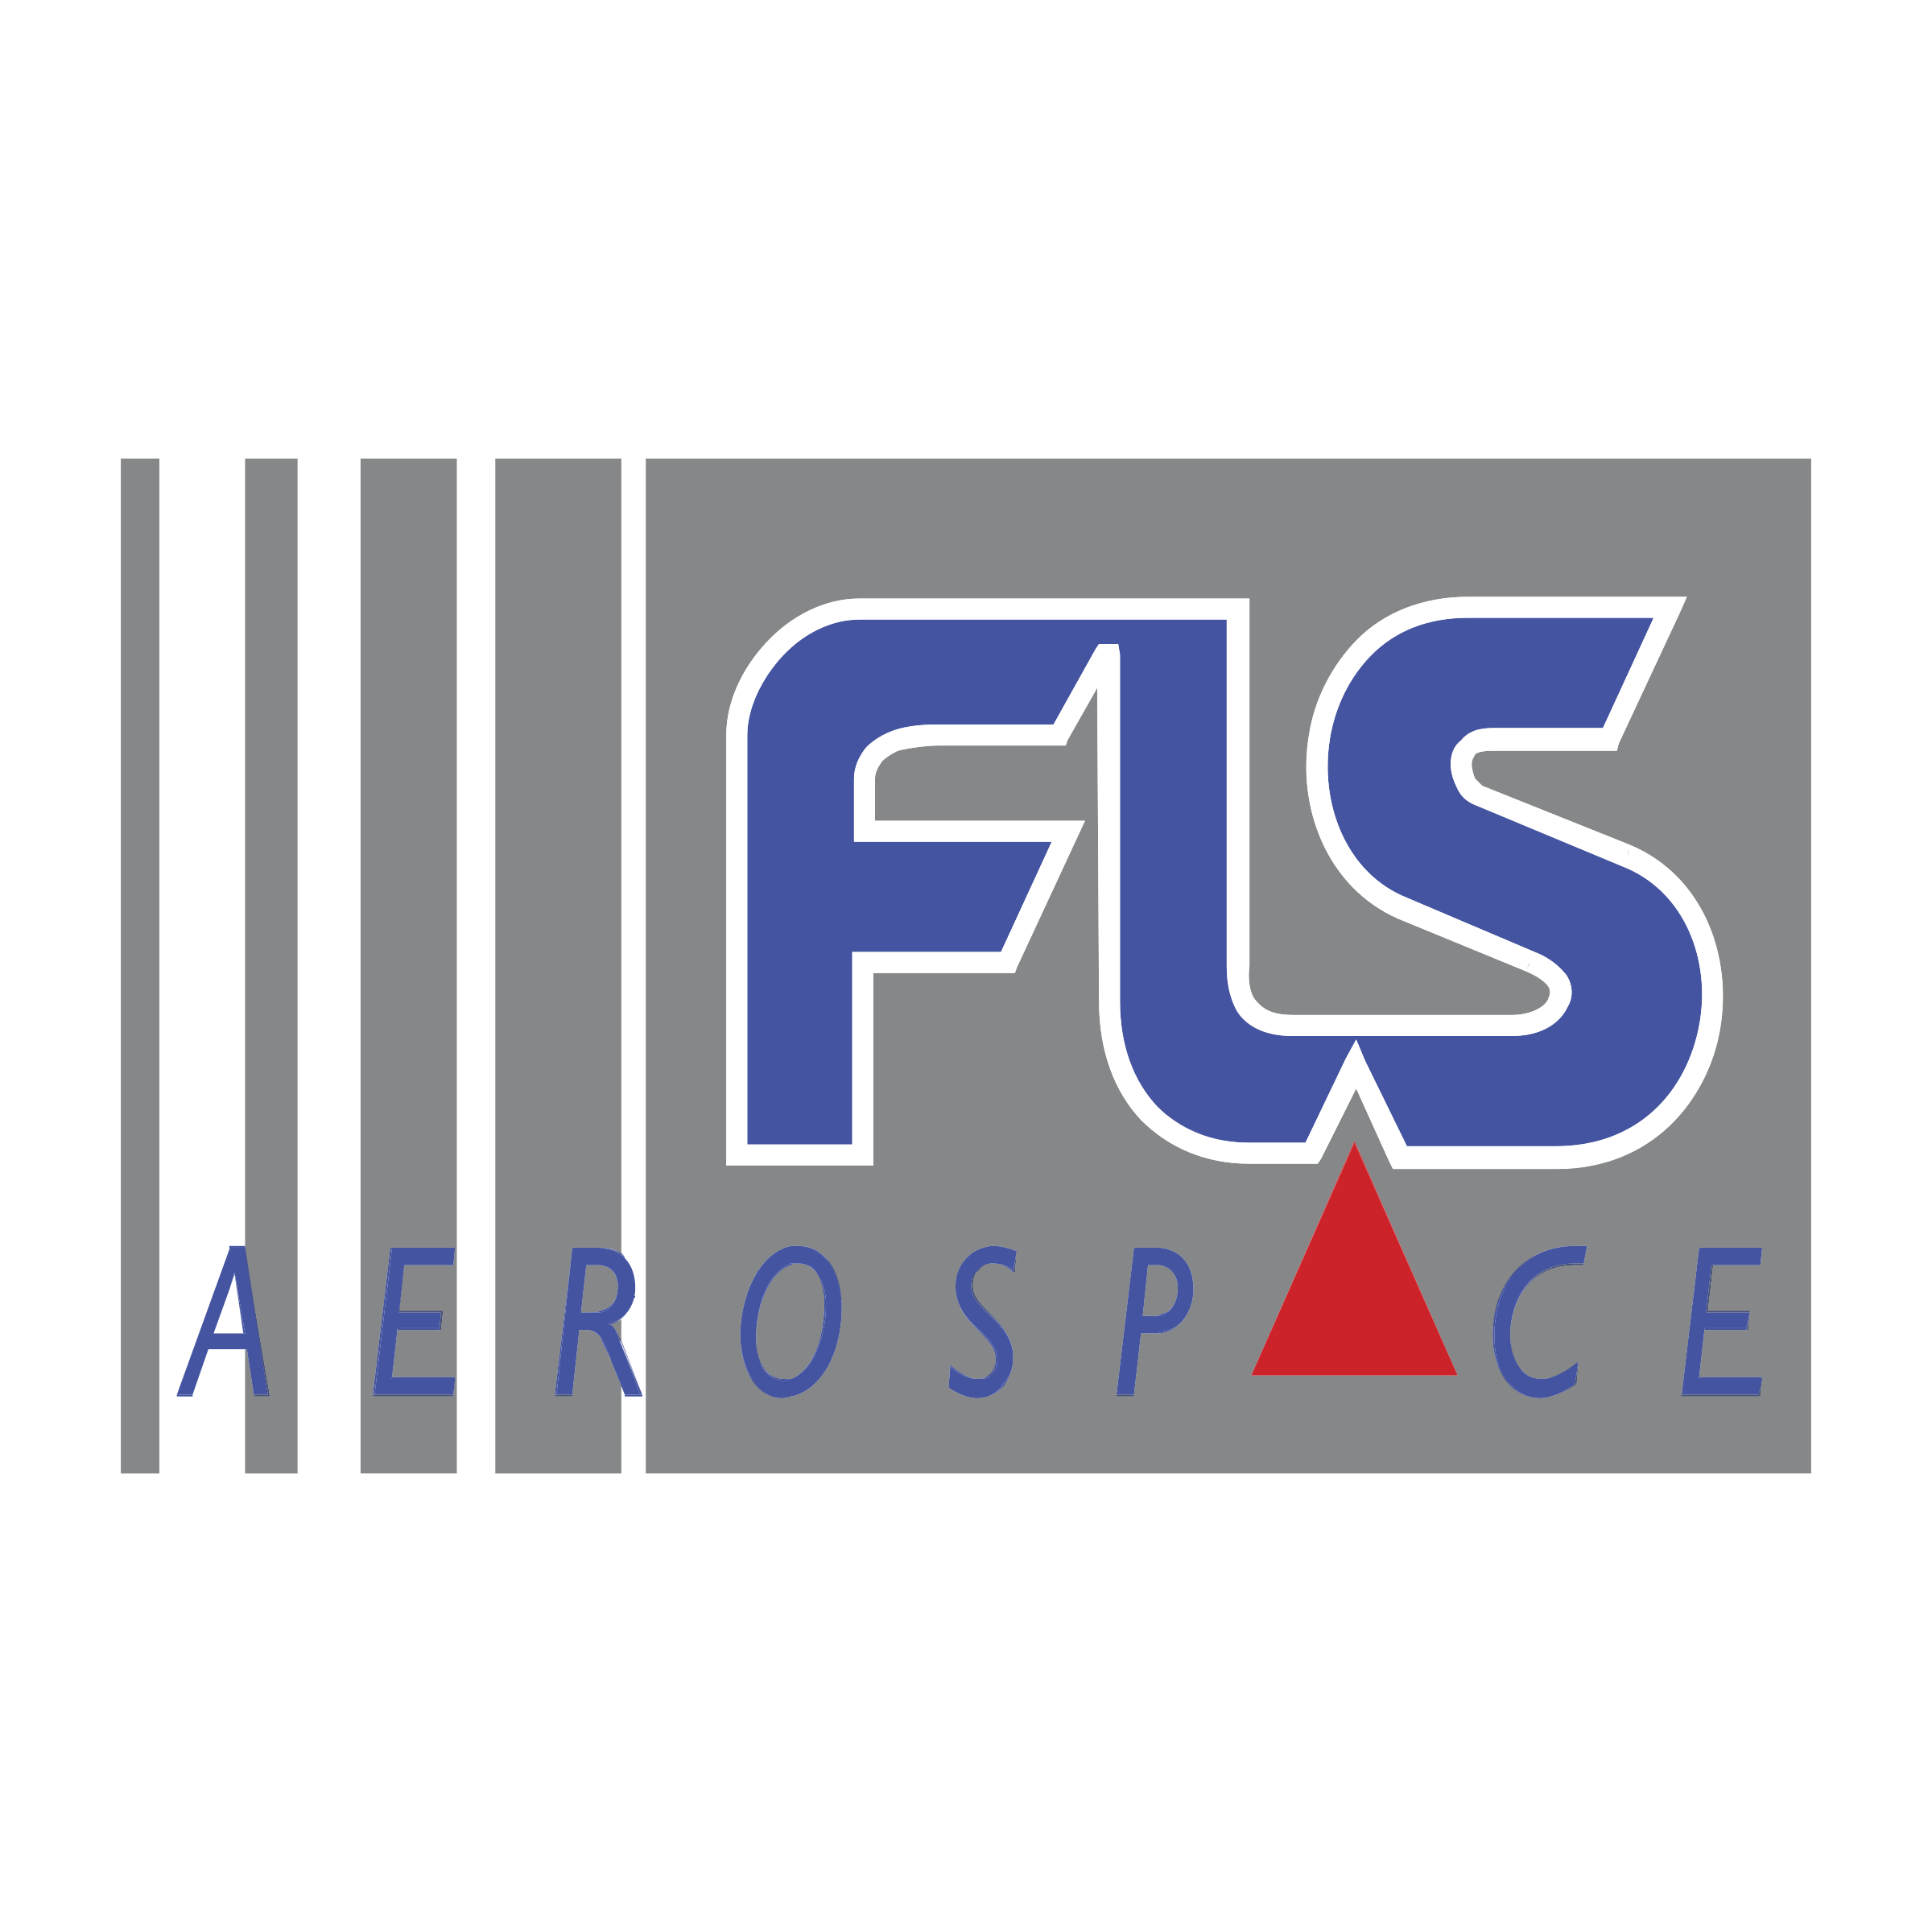 FLS Logo - FLS Aerospace Logo PNG Transparent & SVG Vector - Freebie Supply